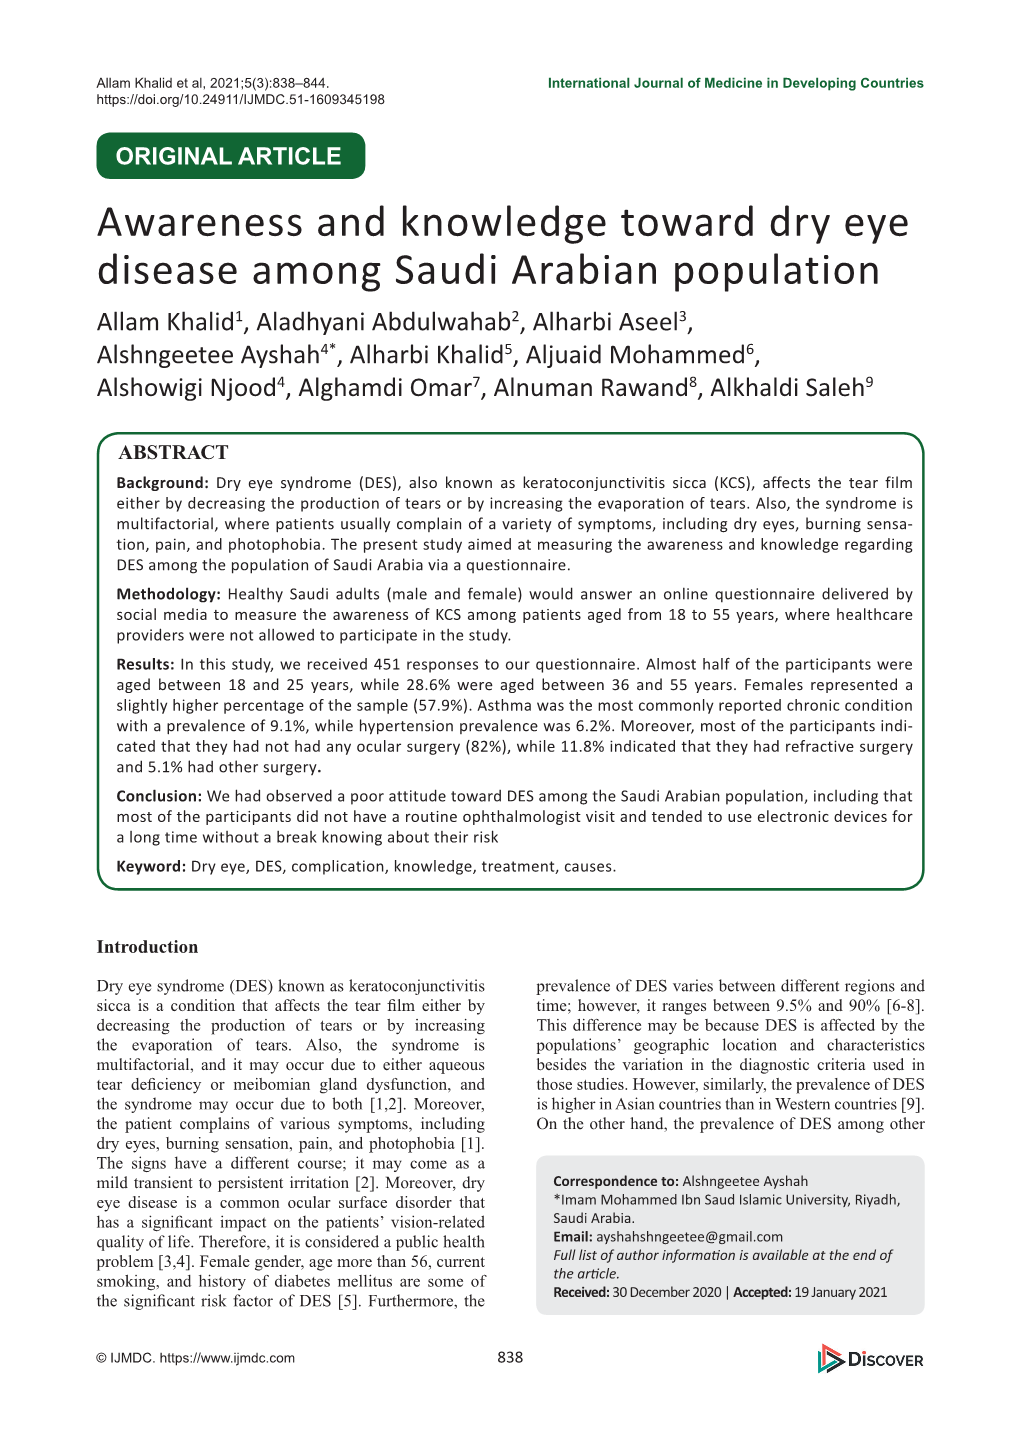 Awareness and Knowledge Toward Dry Eye Disease Among Saudi